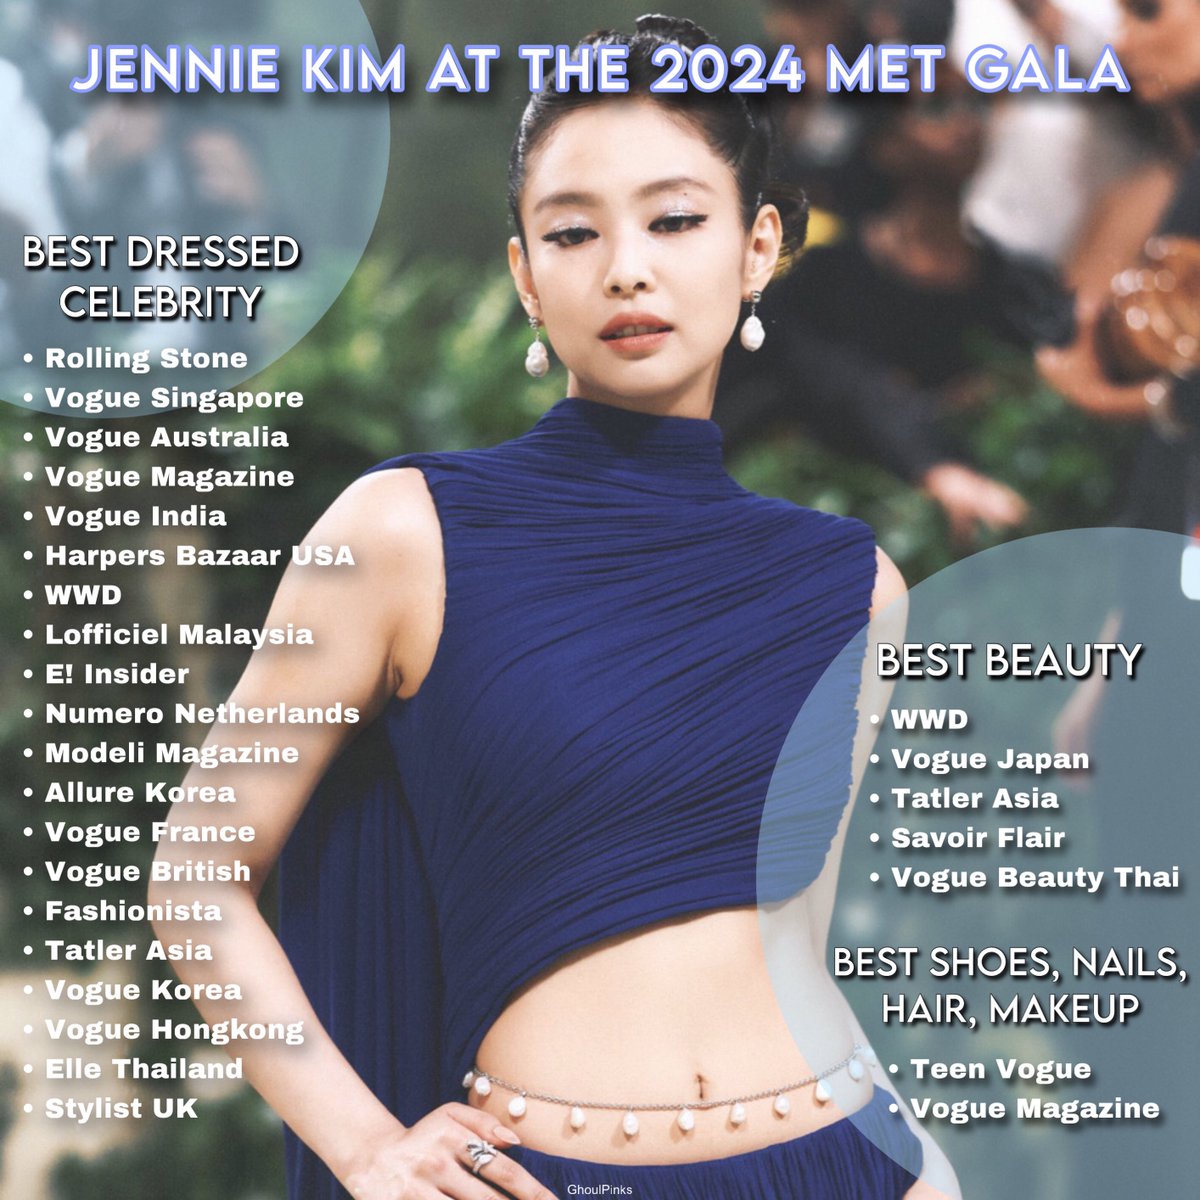 jennie kim named as ‘THE BEST DRESSED’ celebrity at the 2024 #MetGala: #4 Rolling Stone #4 Vogue Singapore #4 Vogue Australia #6 Vogue Magazine #6 Vogue India #6 Harpers Bazaar USA #6 WWD #6 Vogue France #6 Vogue British #8 Fashionista #11 Tatler Asia the best…